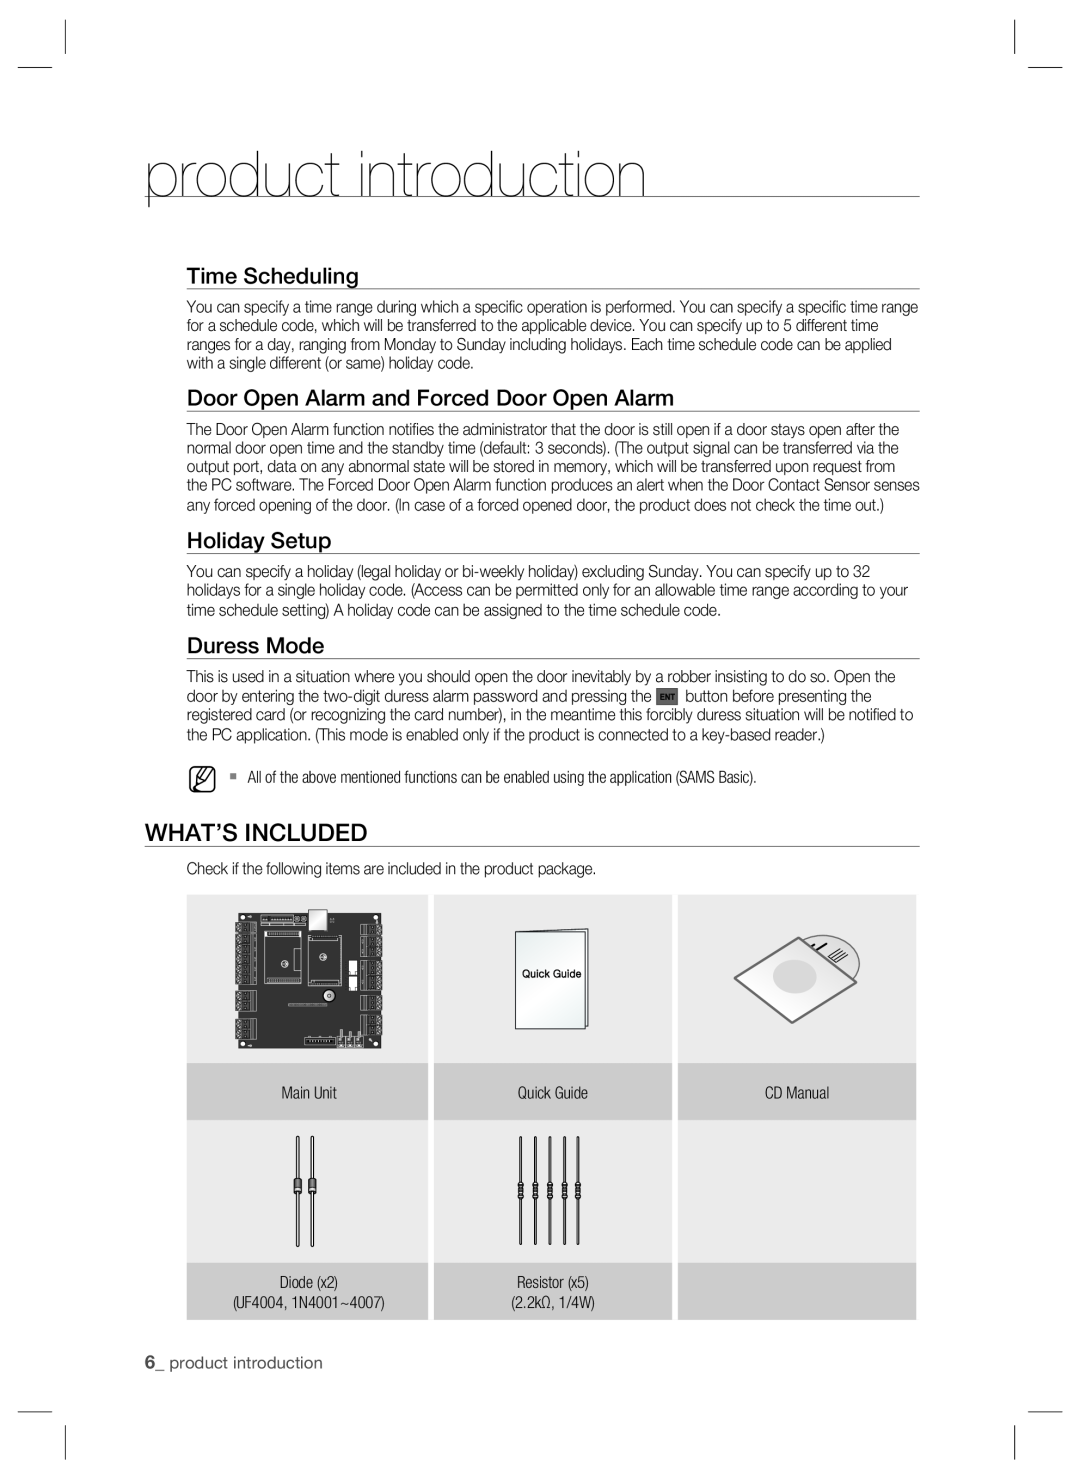 Samsung SSA-P102 What’S Included, Time Scheduling, Door Open Alarm and Forced Door Open Alarm, Holiday Setup, Duress Mode 